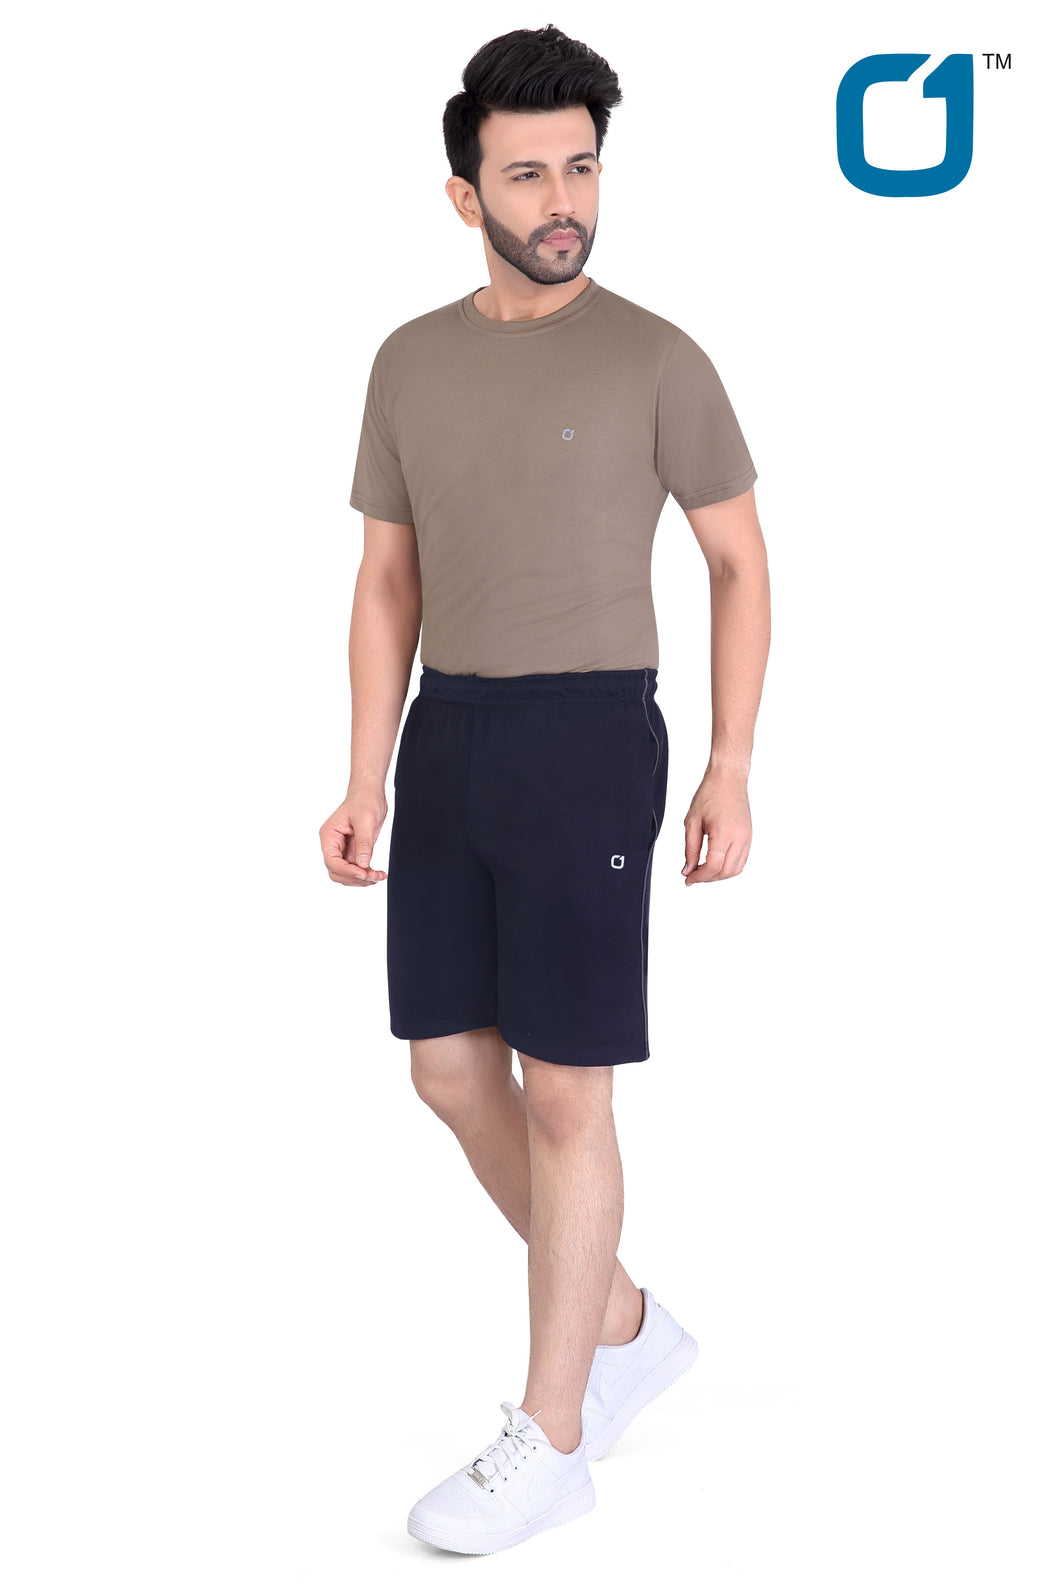 Zerone Navy Blue solid mid-rise regular shorts, has 2 pockets, and drawstring closure